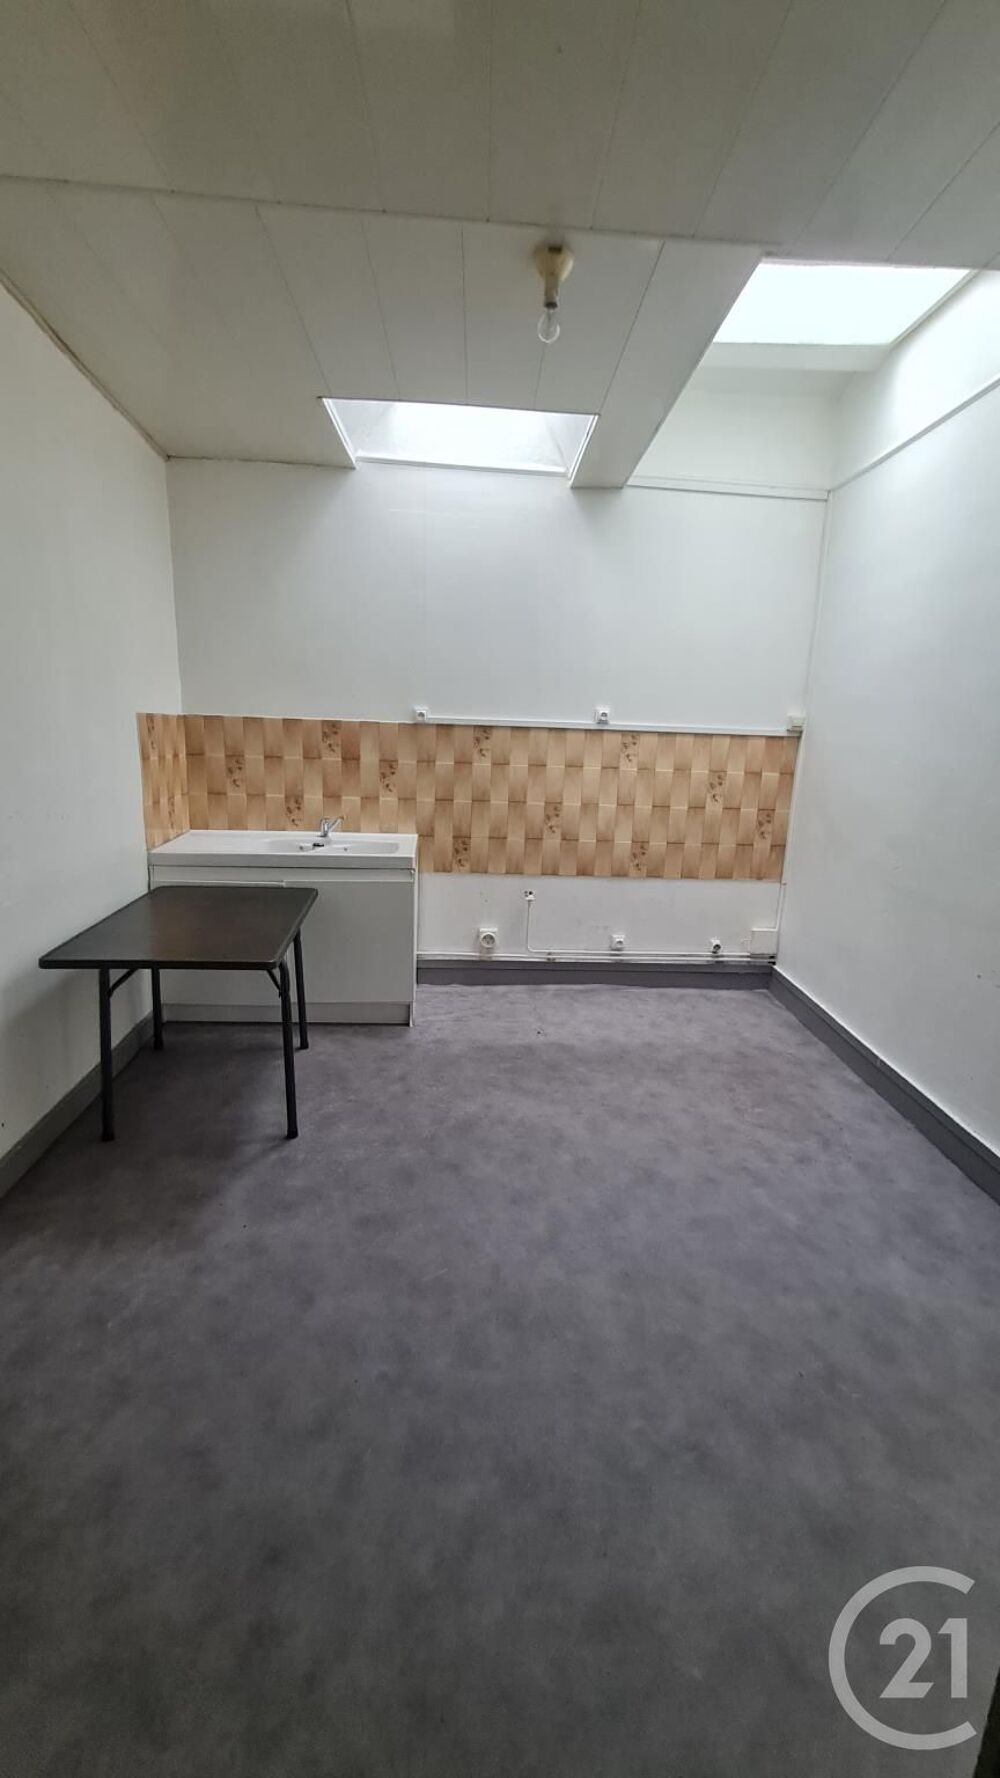 location Appartement - 2 pice(s) - 80 m Montluon (03100)